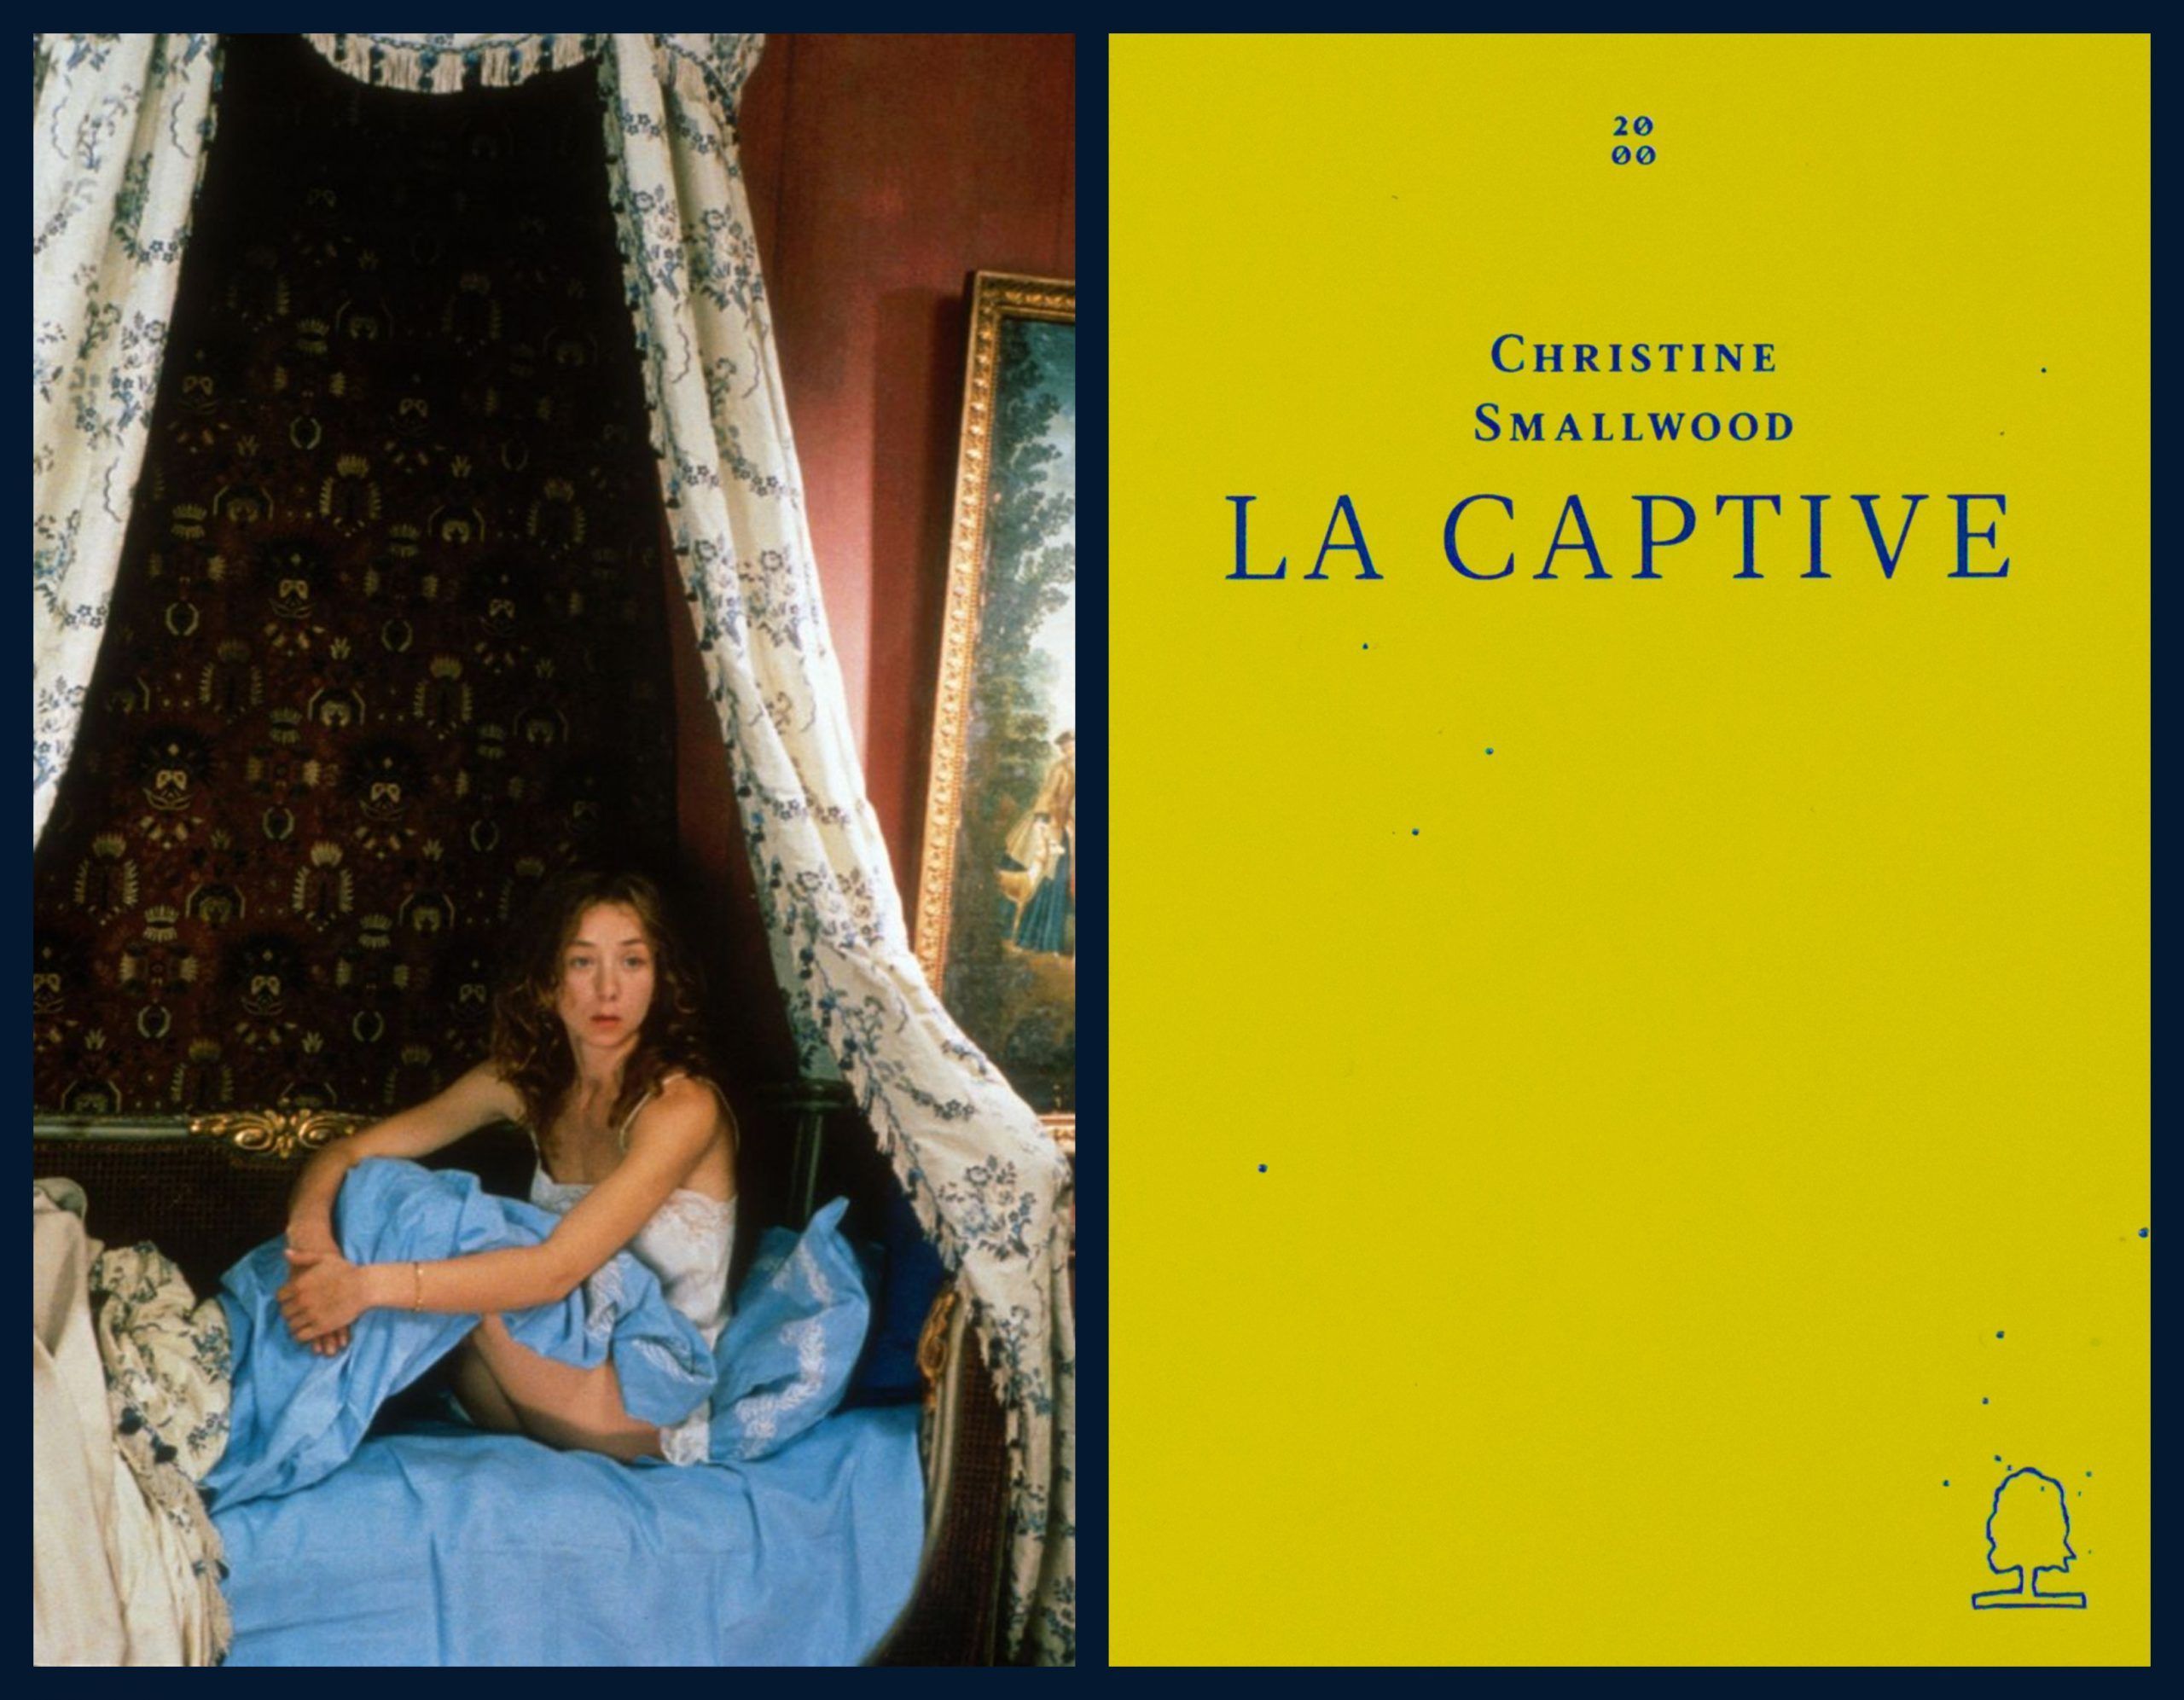 Frame Tale: On Christine Smallwood’s “La Captive” and Chantal Akerman